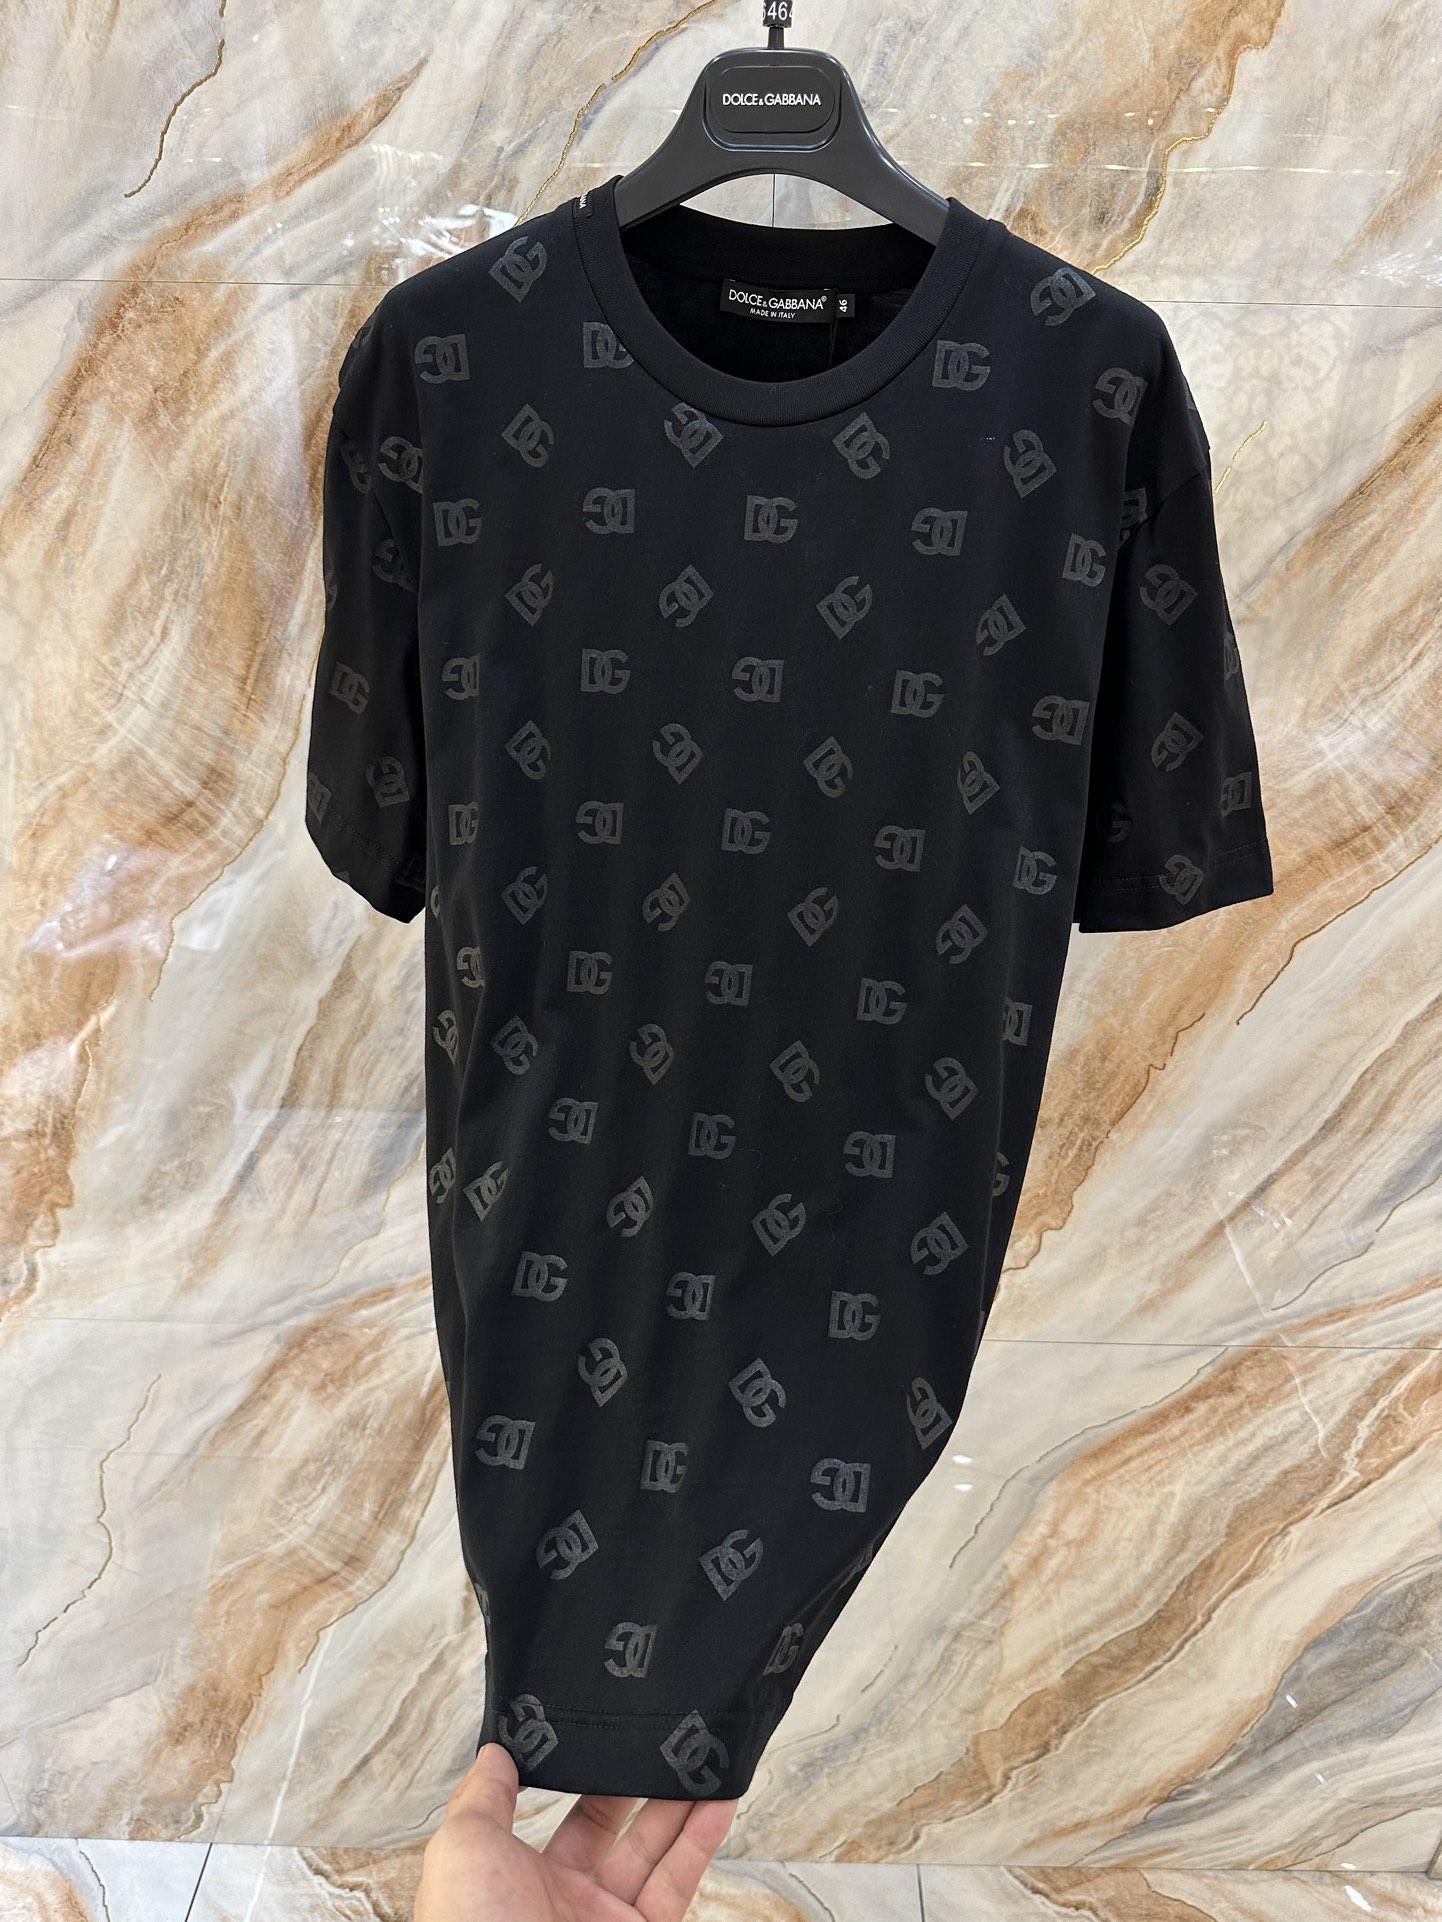 round-neck-t-shirt-with-dg-monogram-print-7187_16845020744-1000